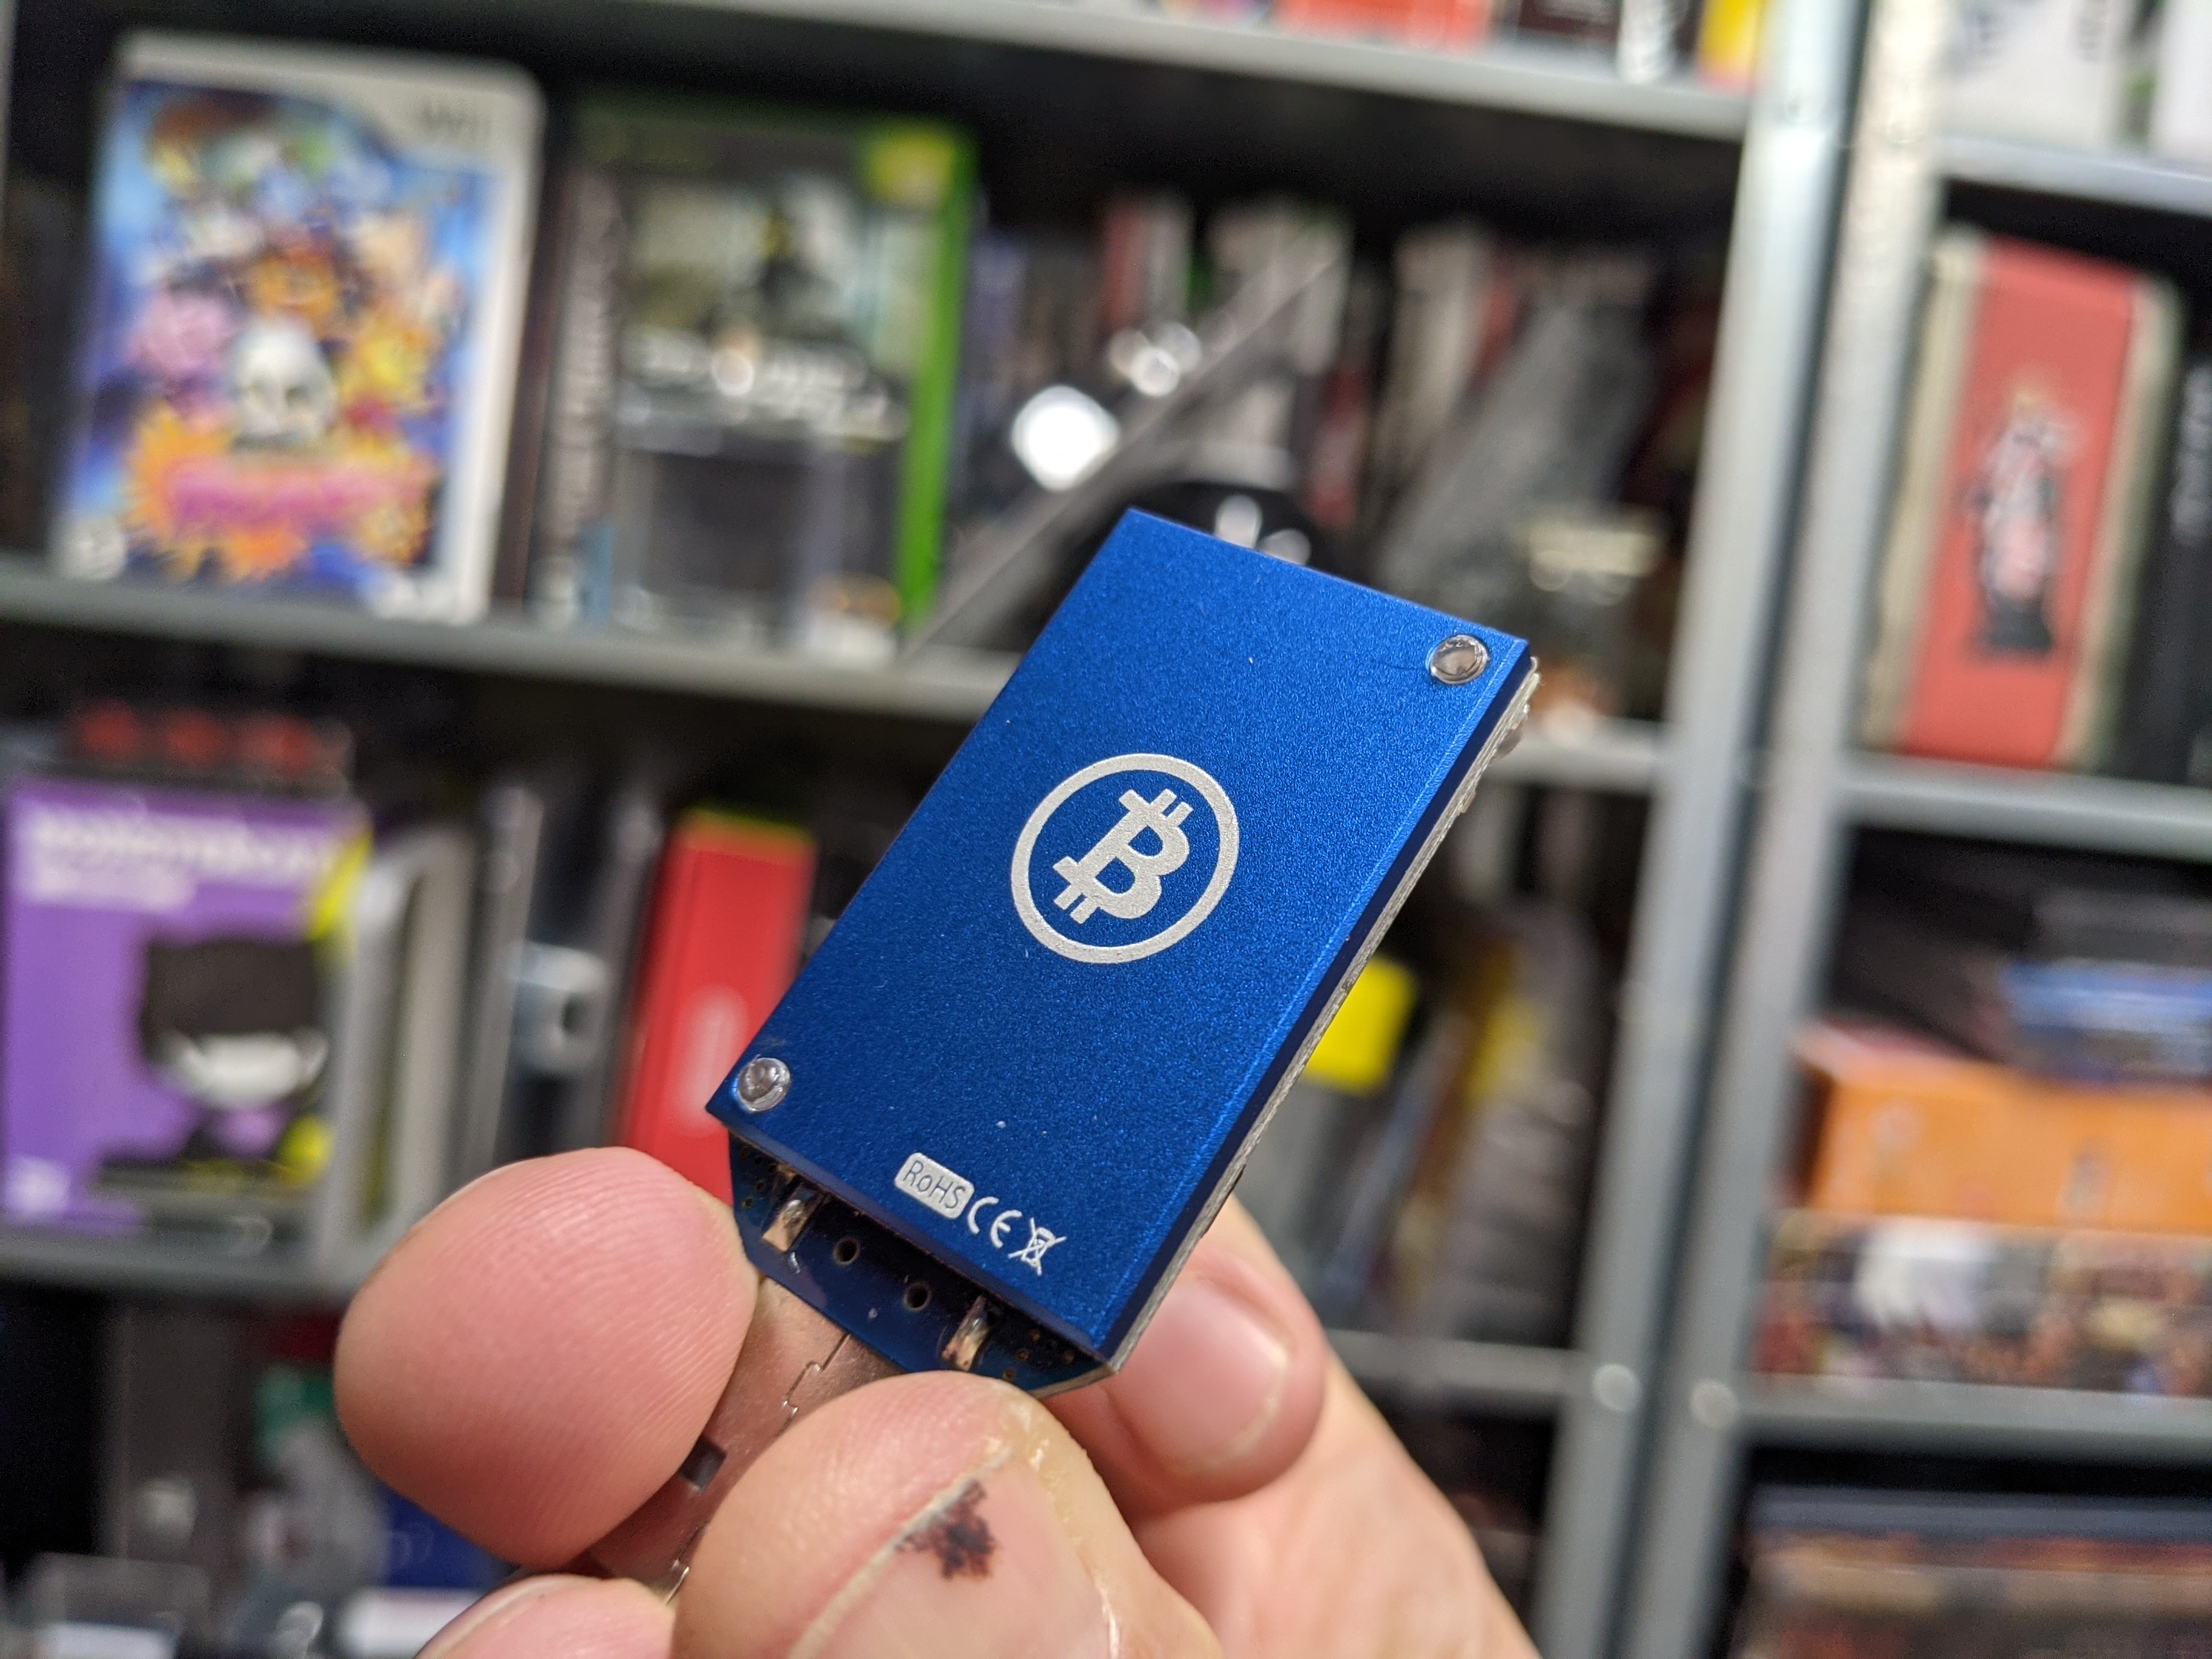 USB Bitcoin Miner, slightly used maybe